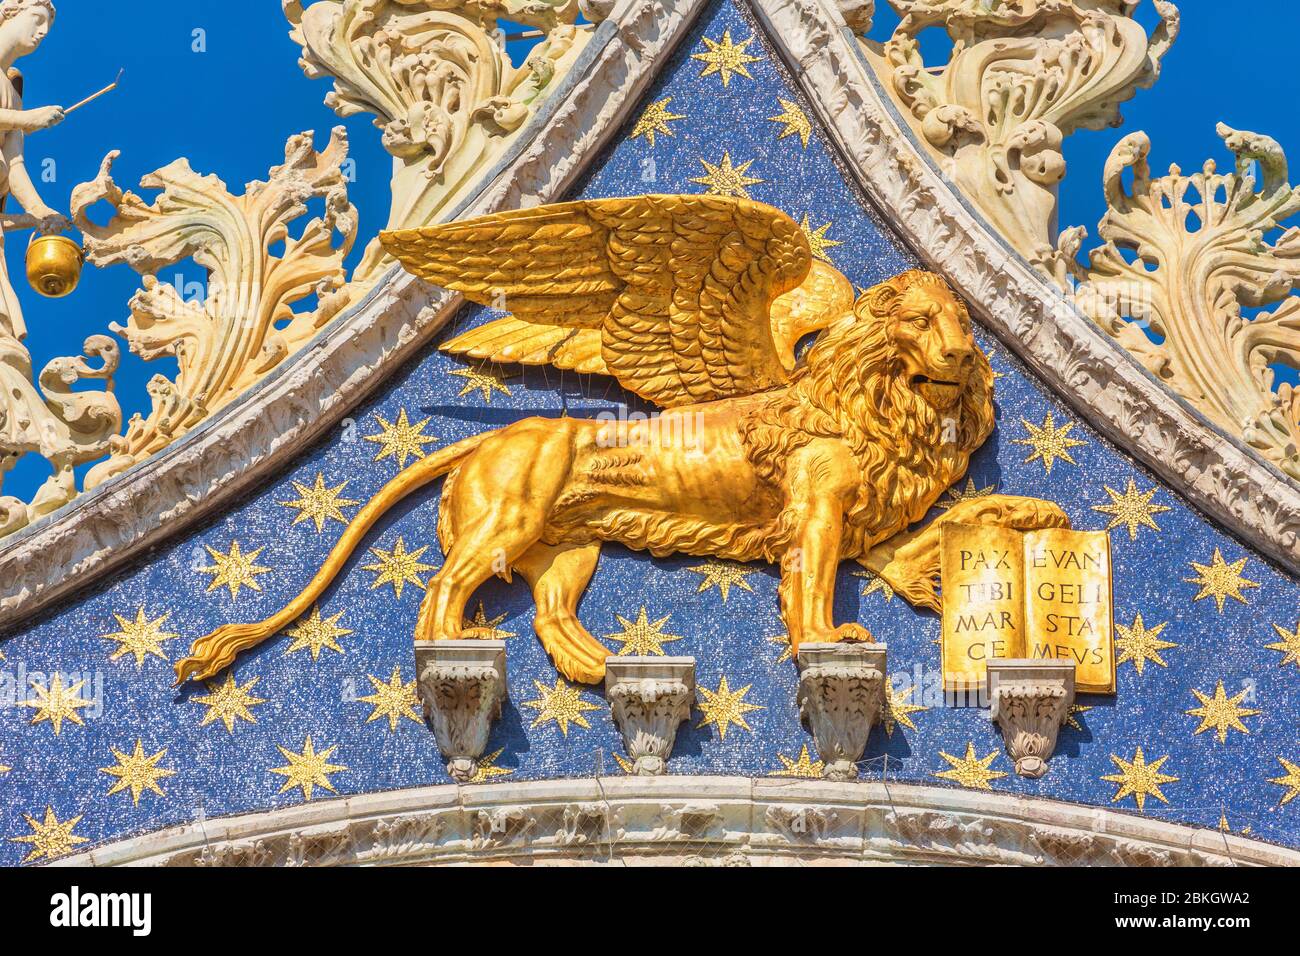 Venice, Venice Province, Veneto Region, Italy.   The winged lion above the entrance to St. Mark's basilica.  The lion is the symbol of Venice.  Venice Stock Photo